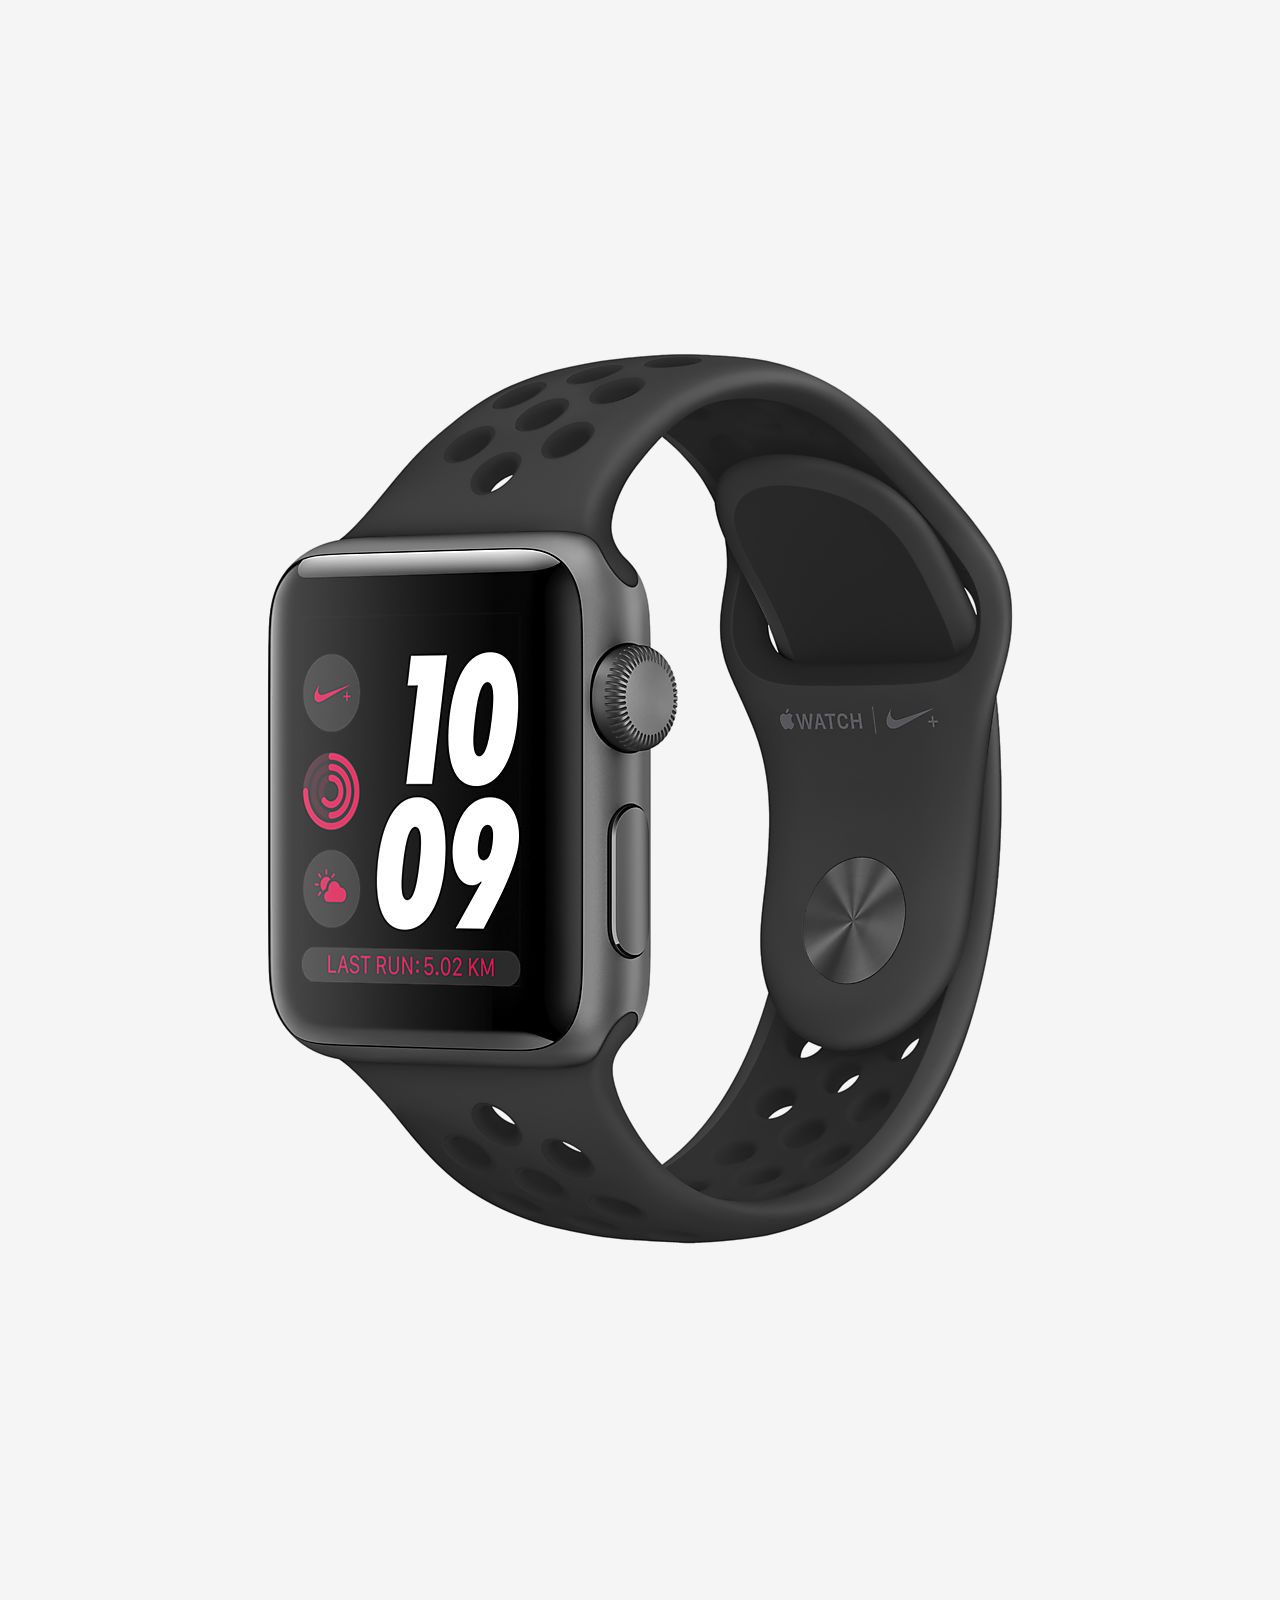 Apple Watch Nike+ GPS Series 3 (38mm) Open Box Running Watch